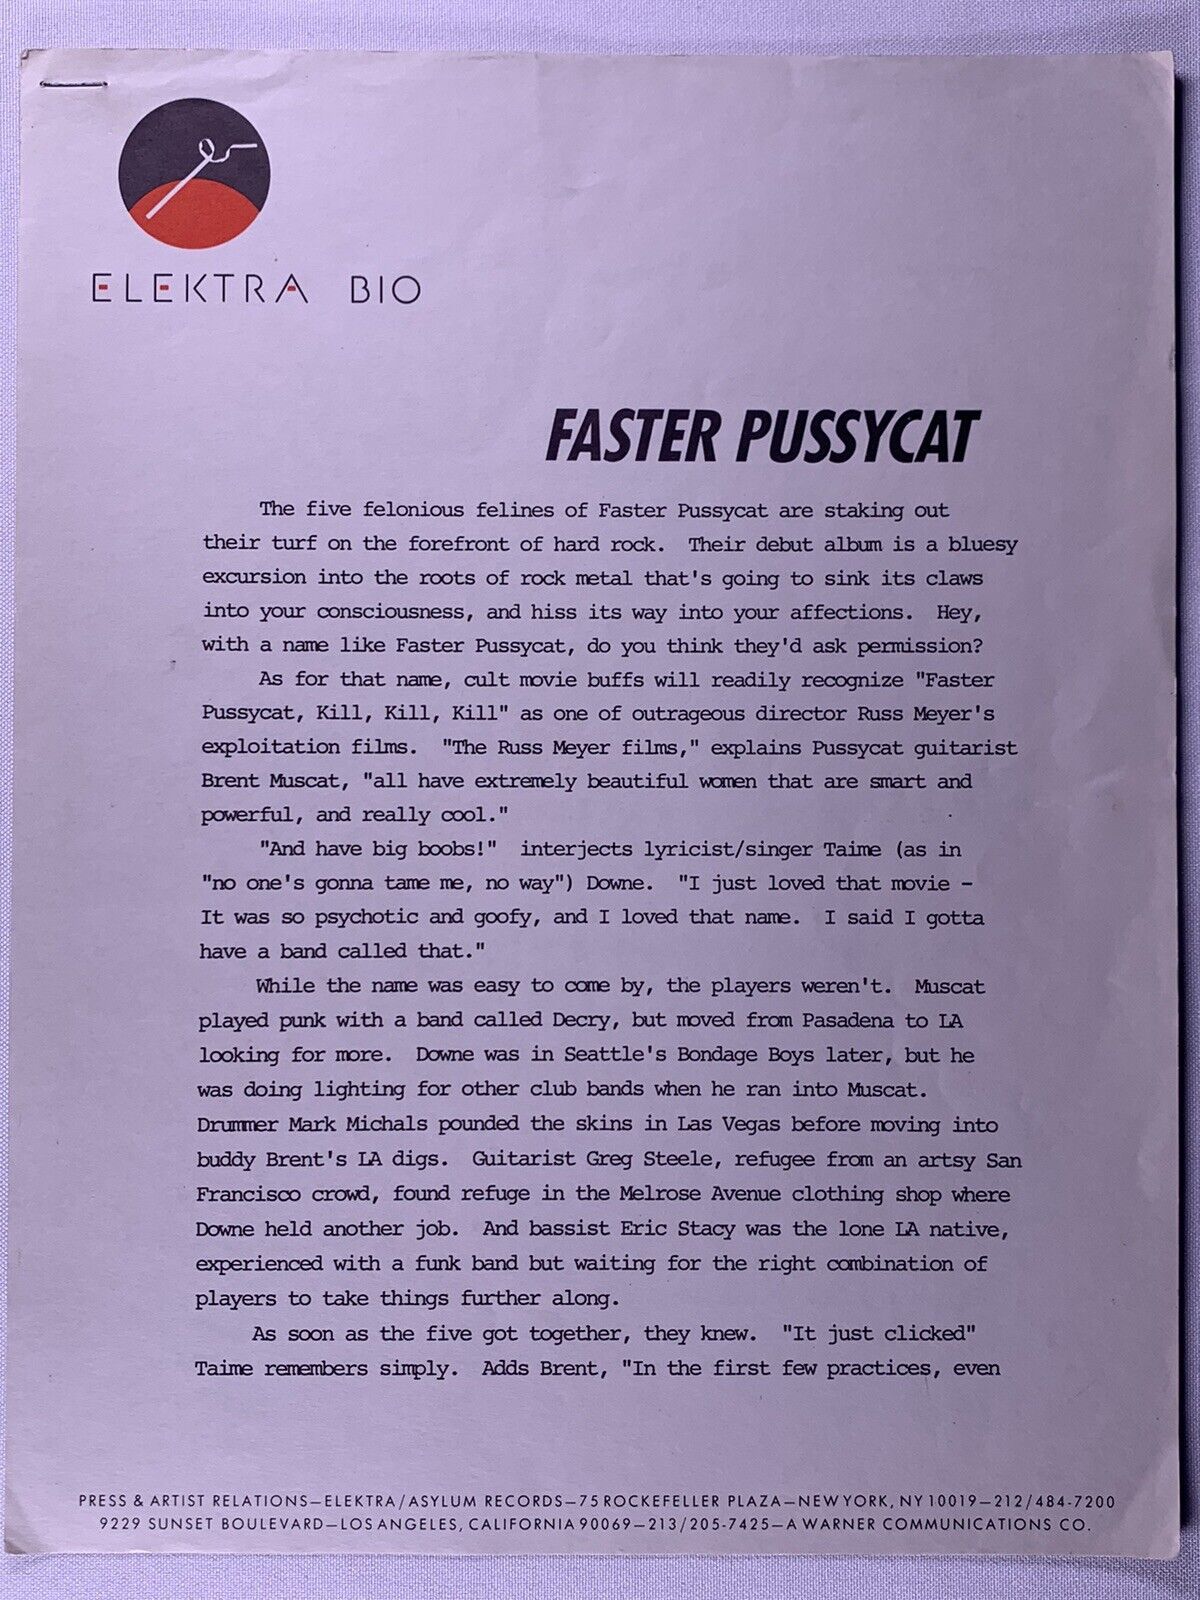 Faster Pussycat Press Release Biography Original Vintage Elektra Promo 1987